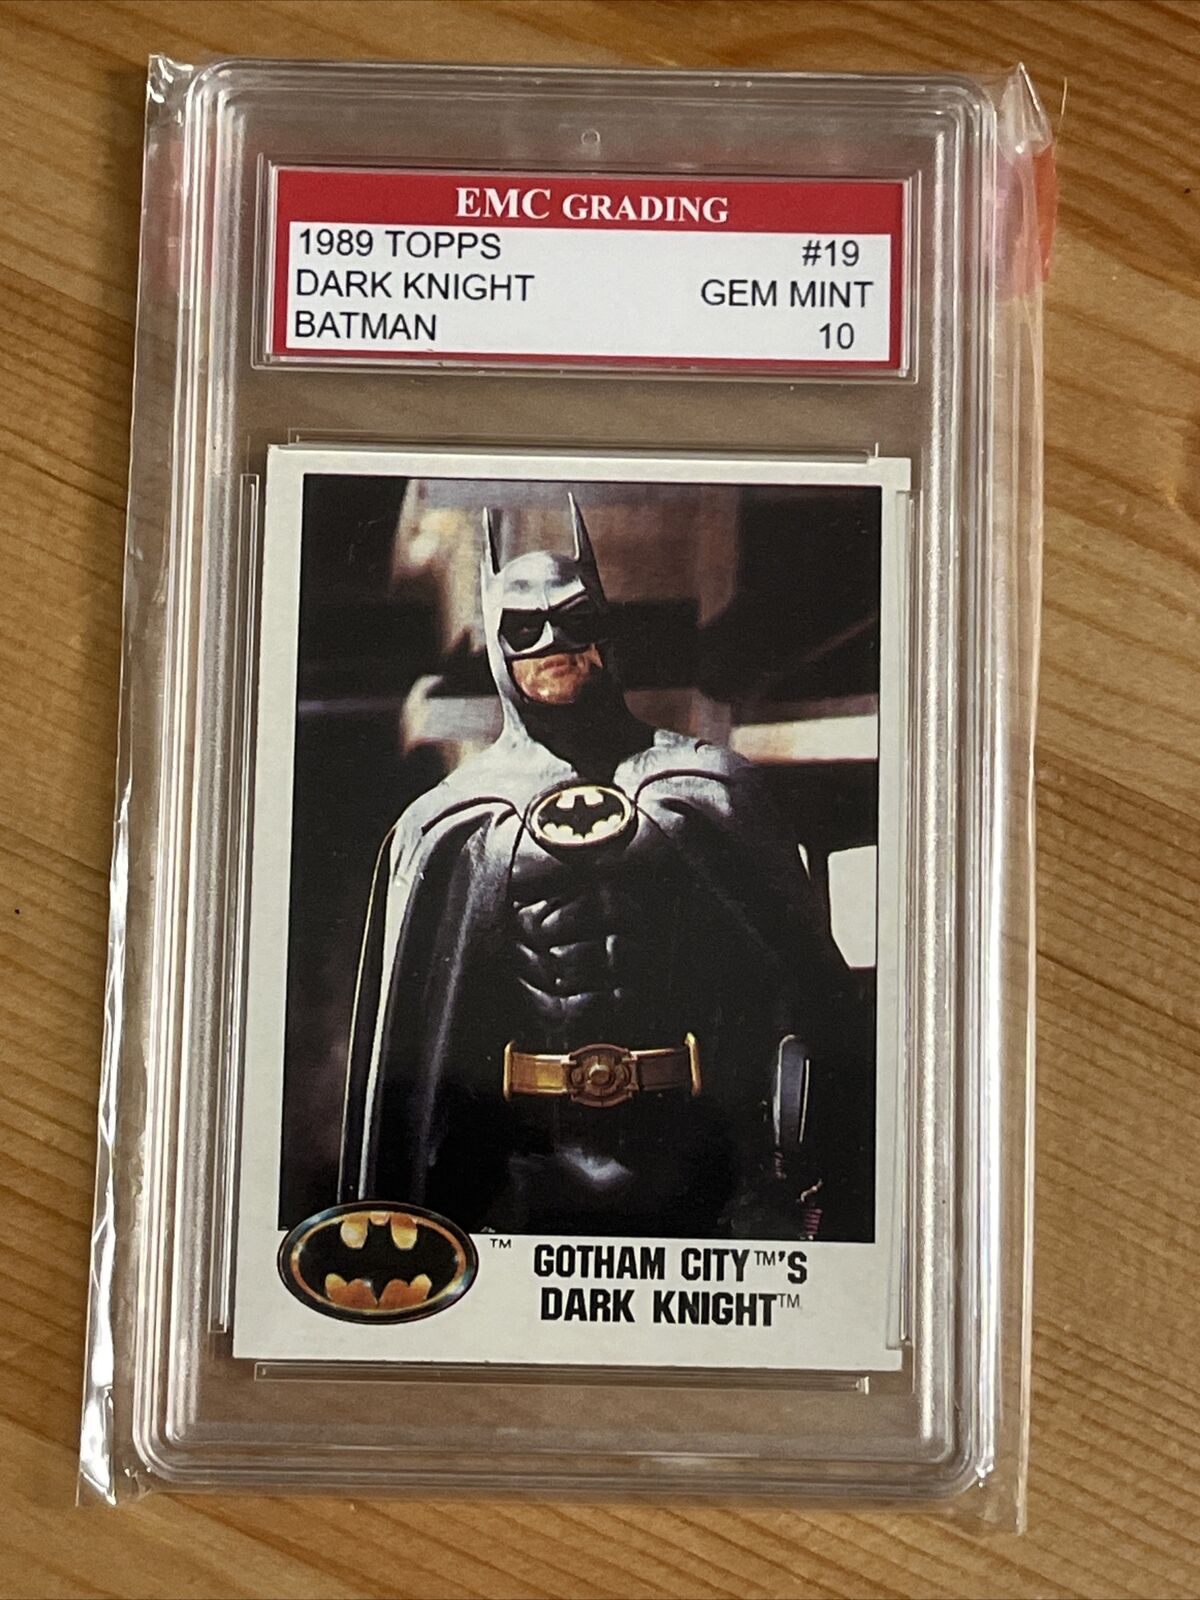 1989 Topps Batman Gotham City's Dark Knight #19 Graded EMC 10 GEM MINT Keaton